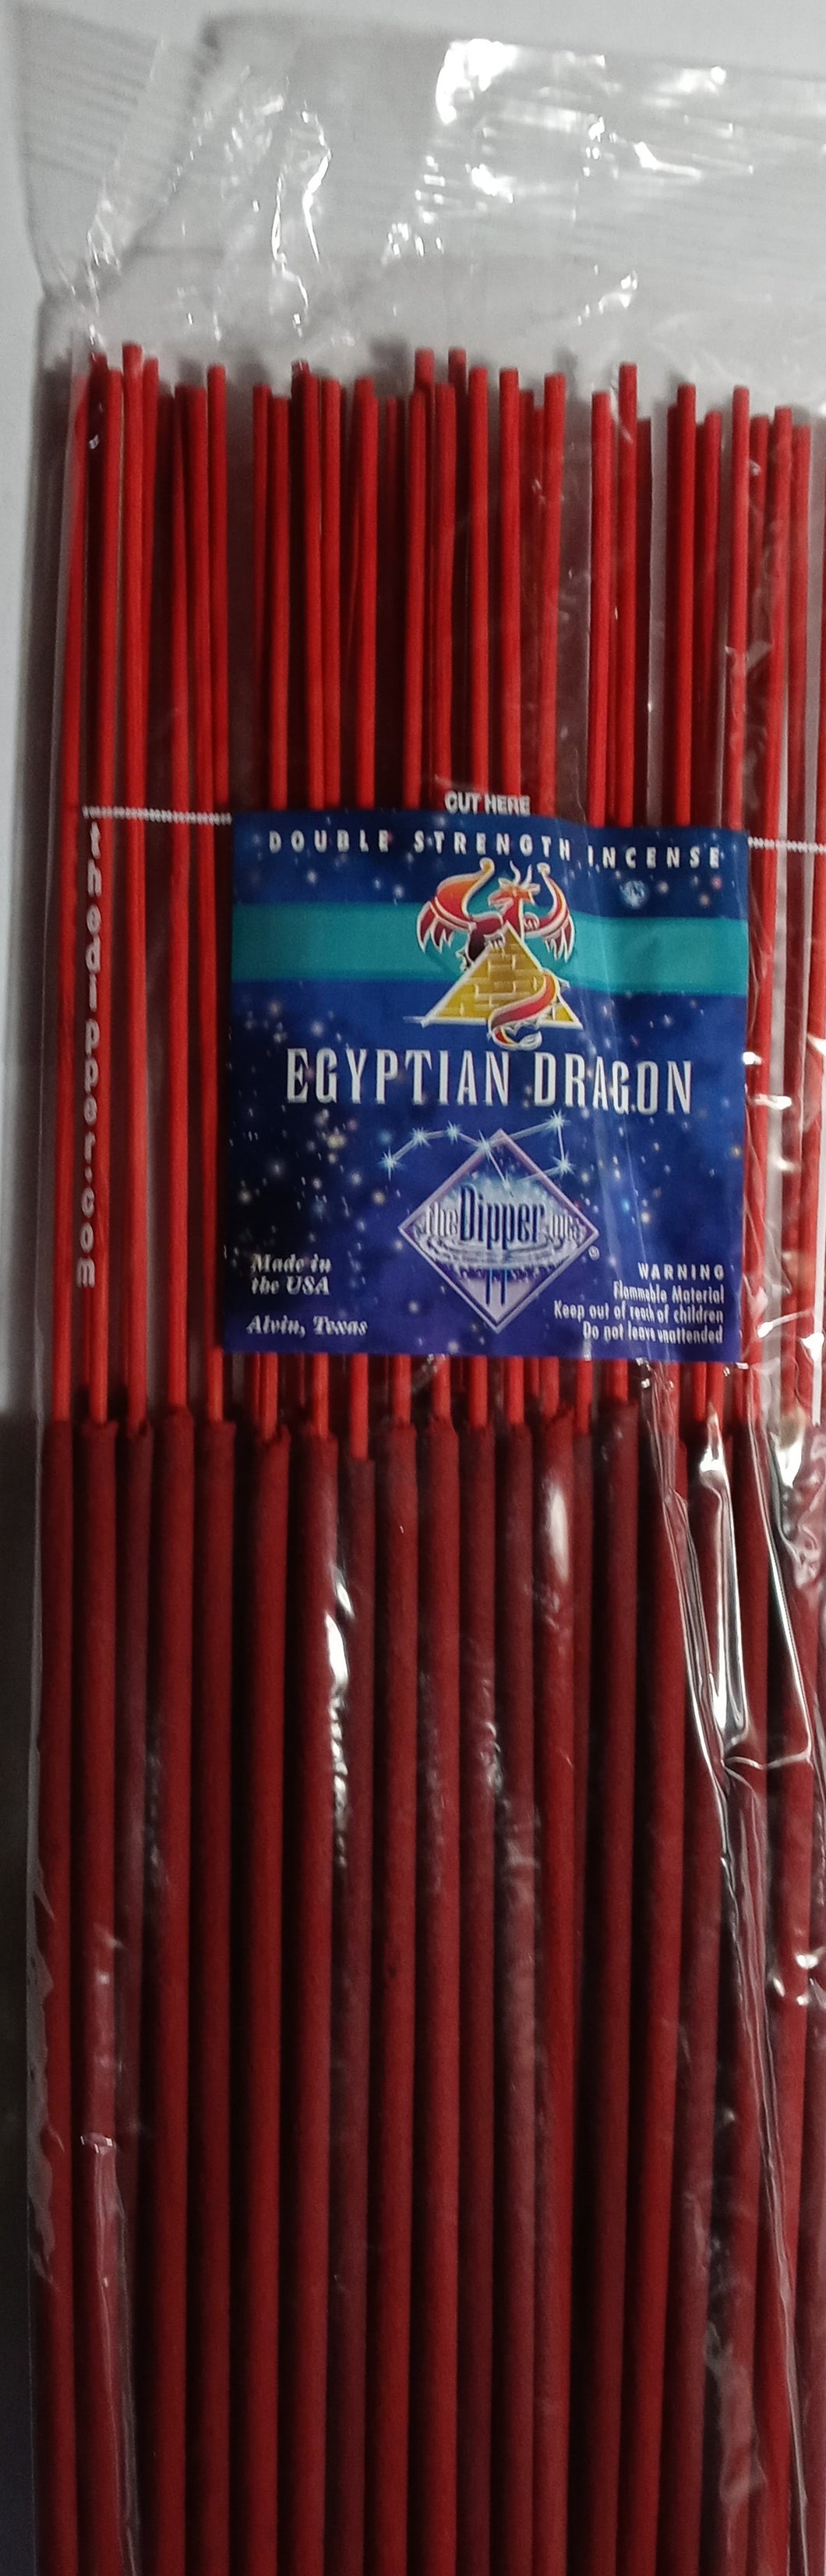 The Dipper Egyptian Dragon 19 Inch Jumbo Incense Sticks - 50 Sticks